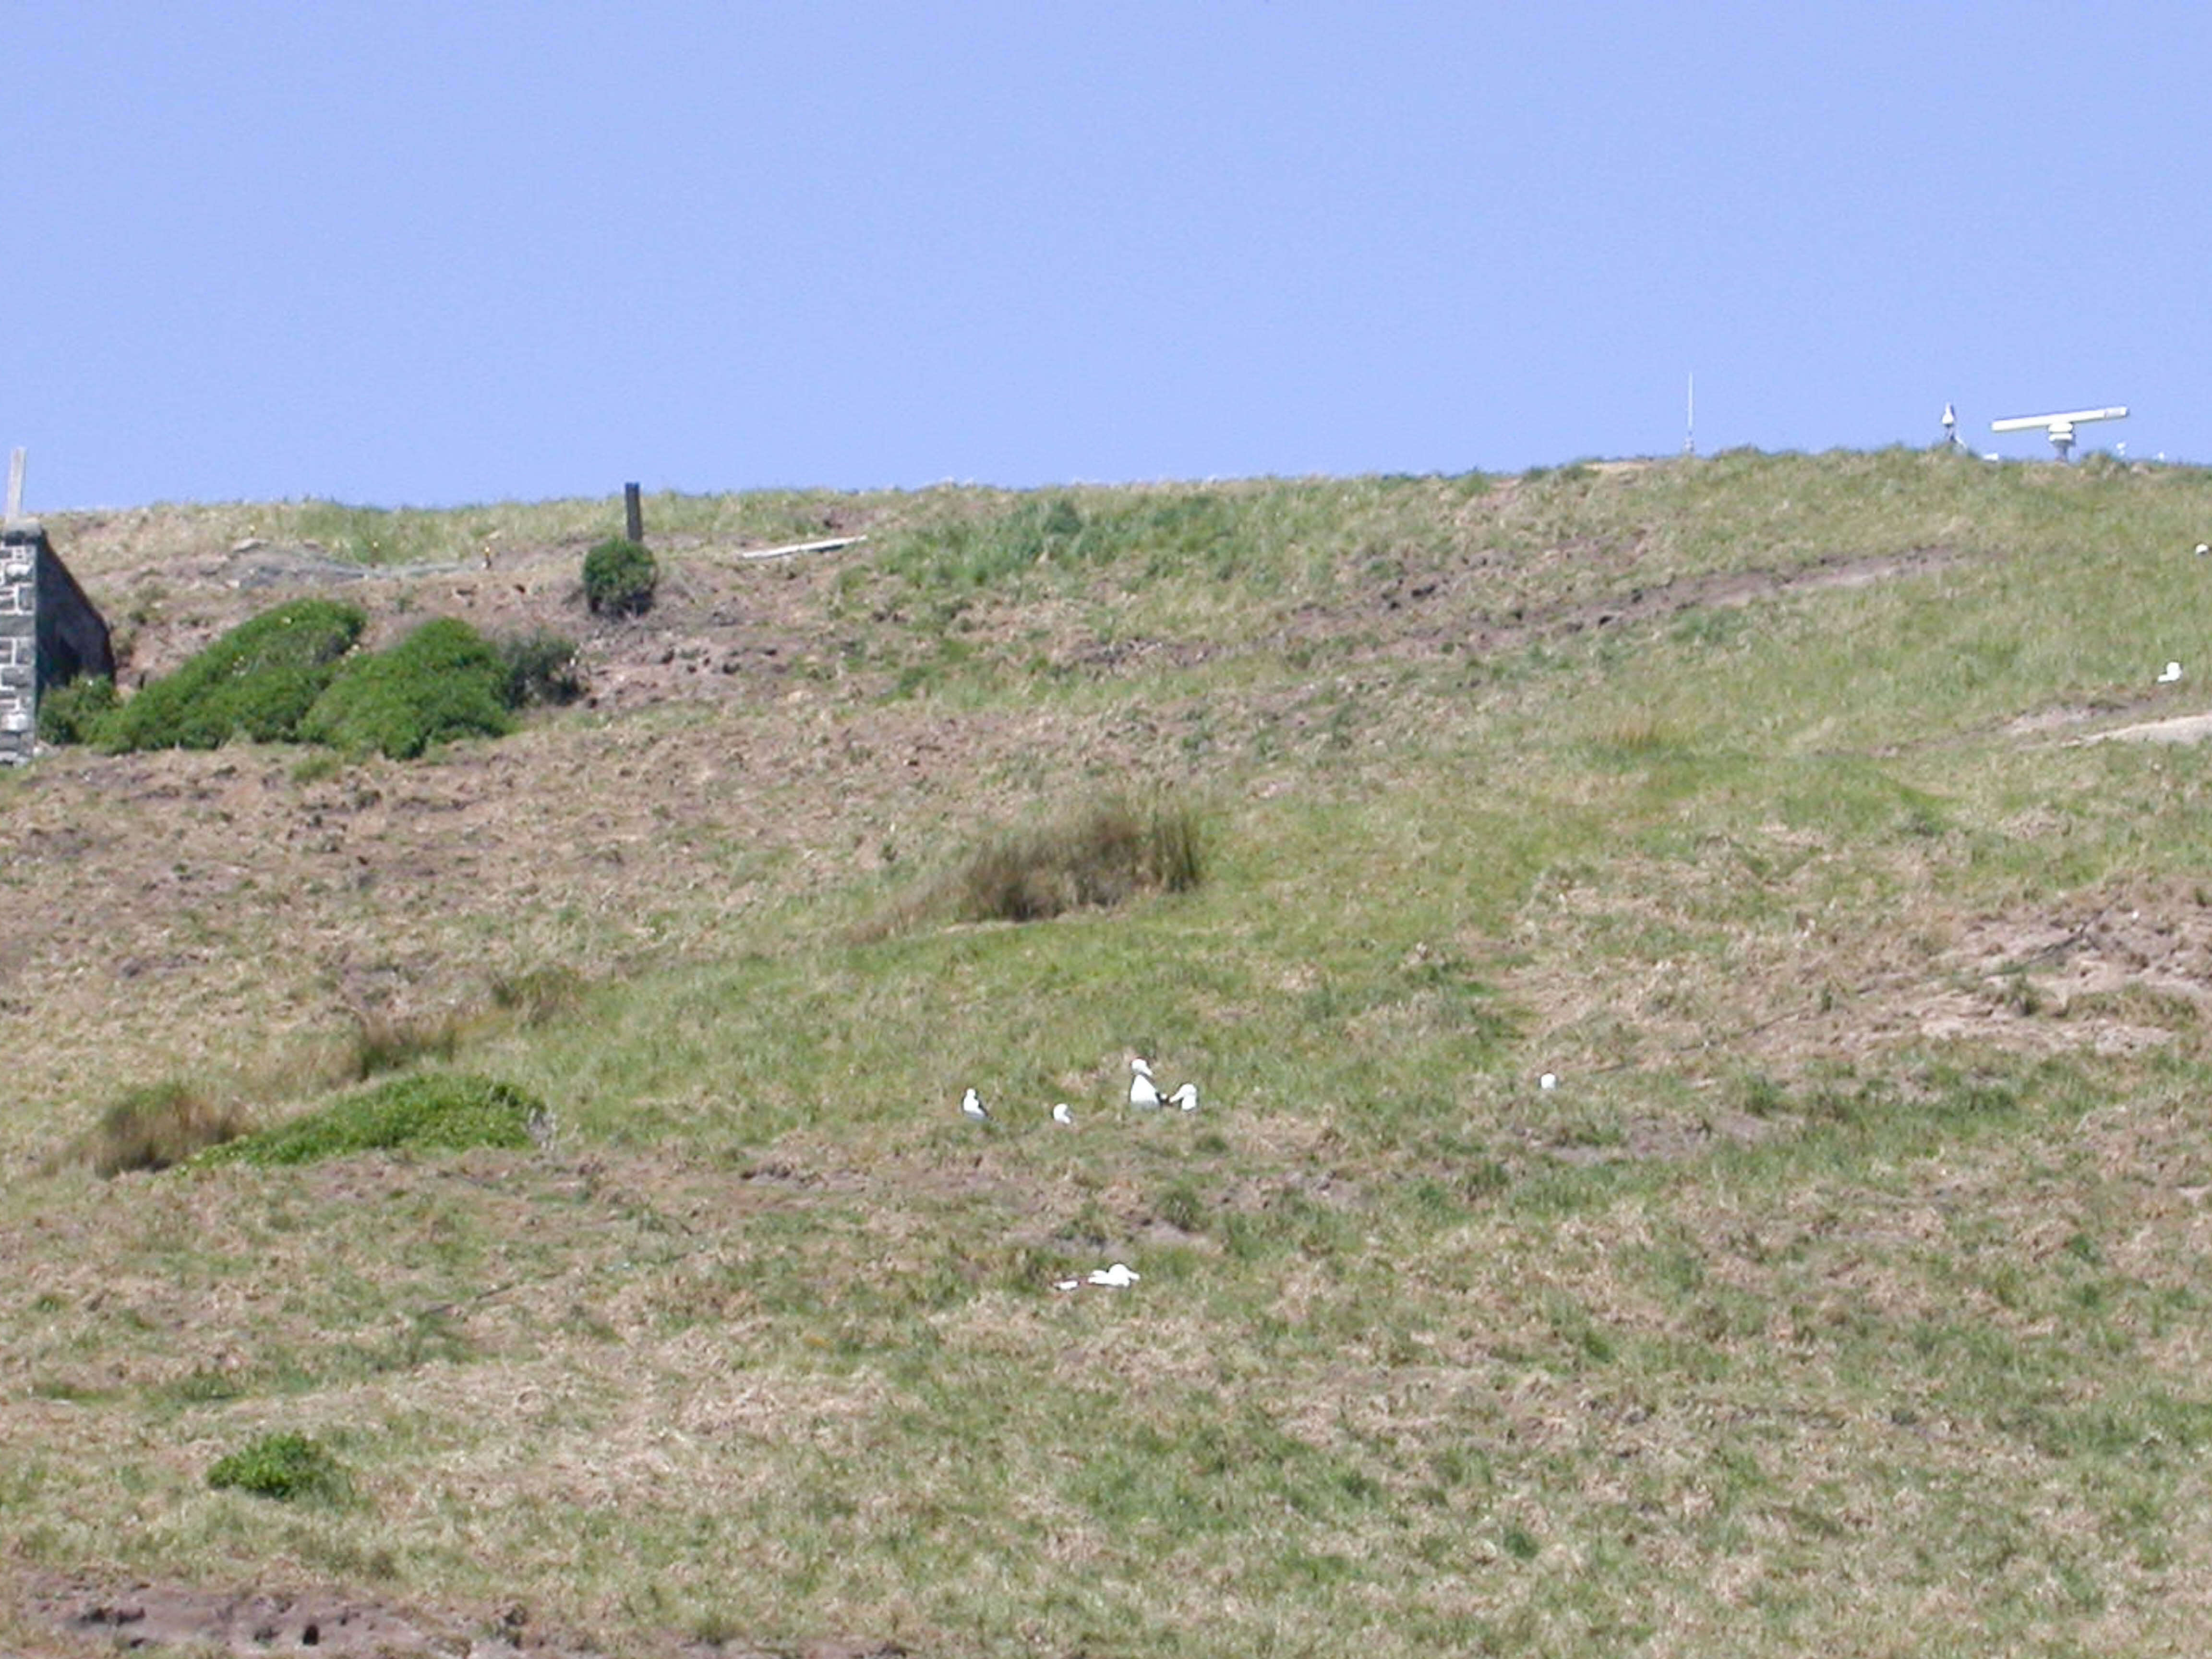 Image of Northern Royal Albatross